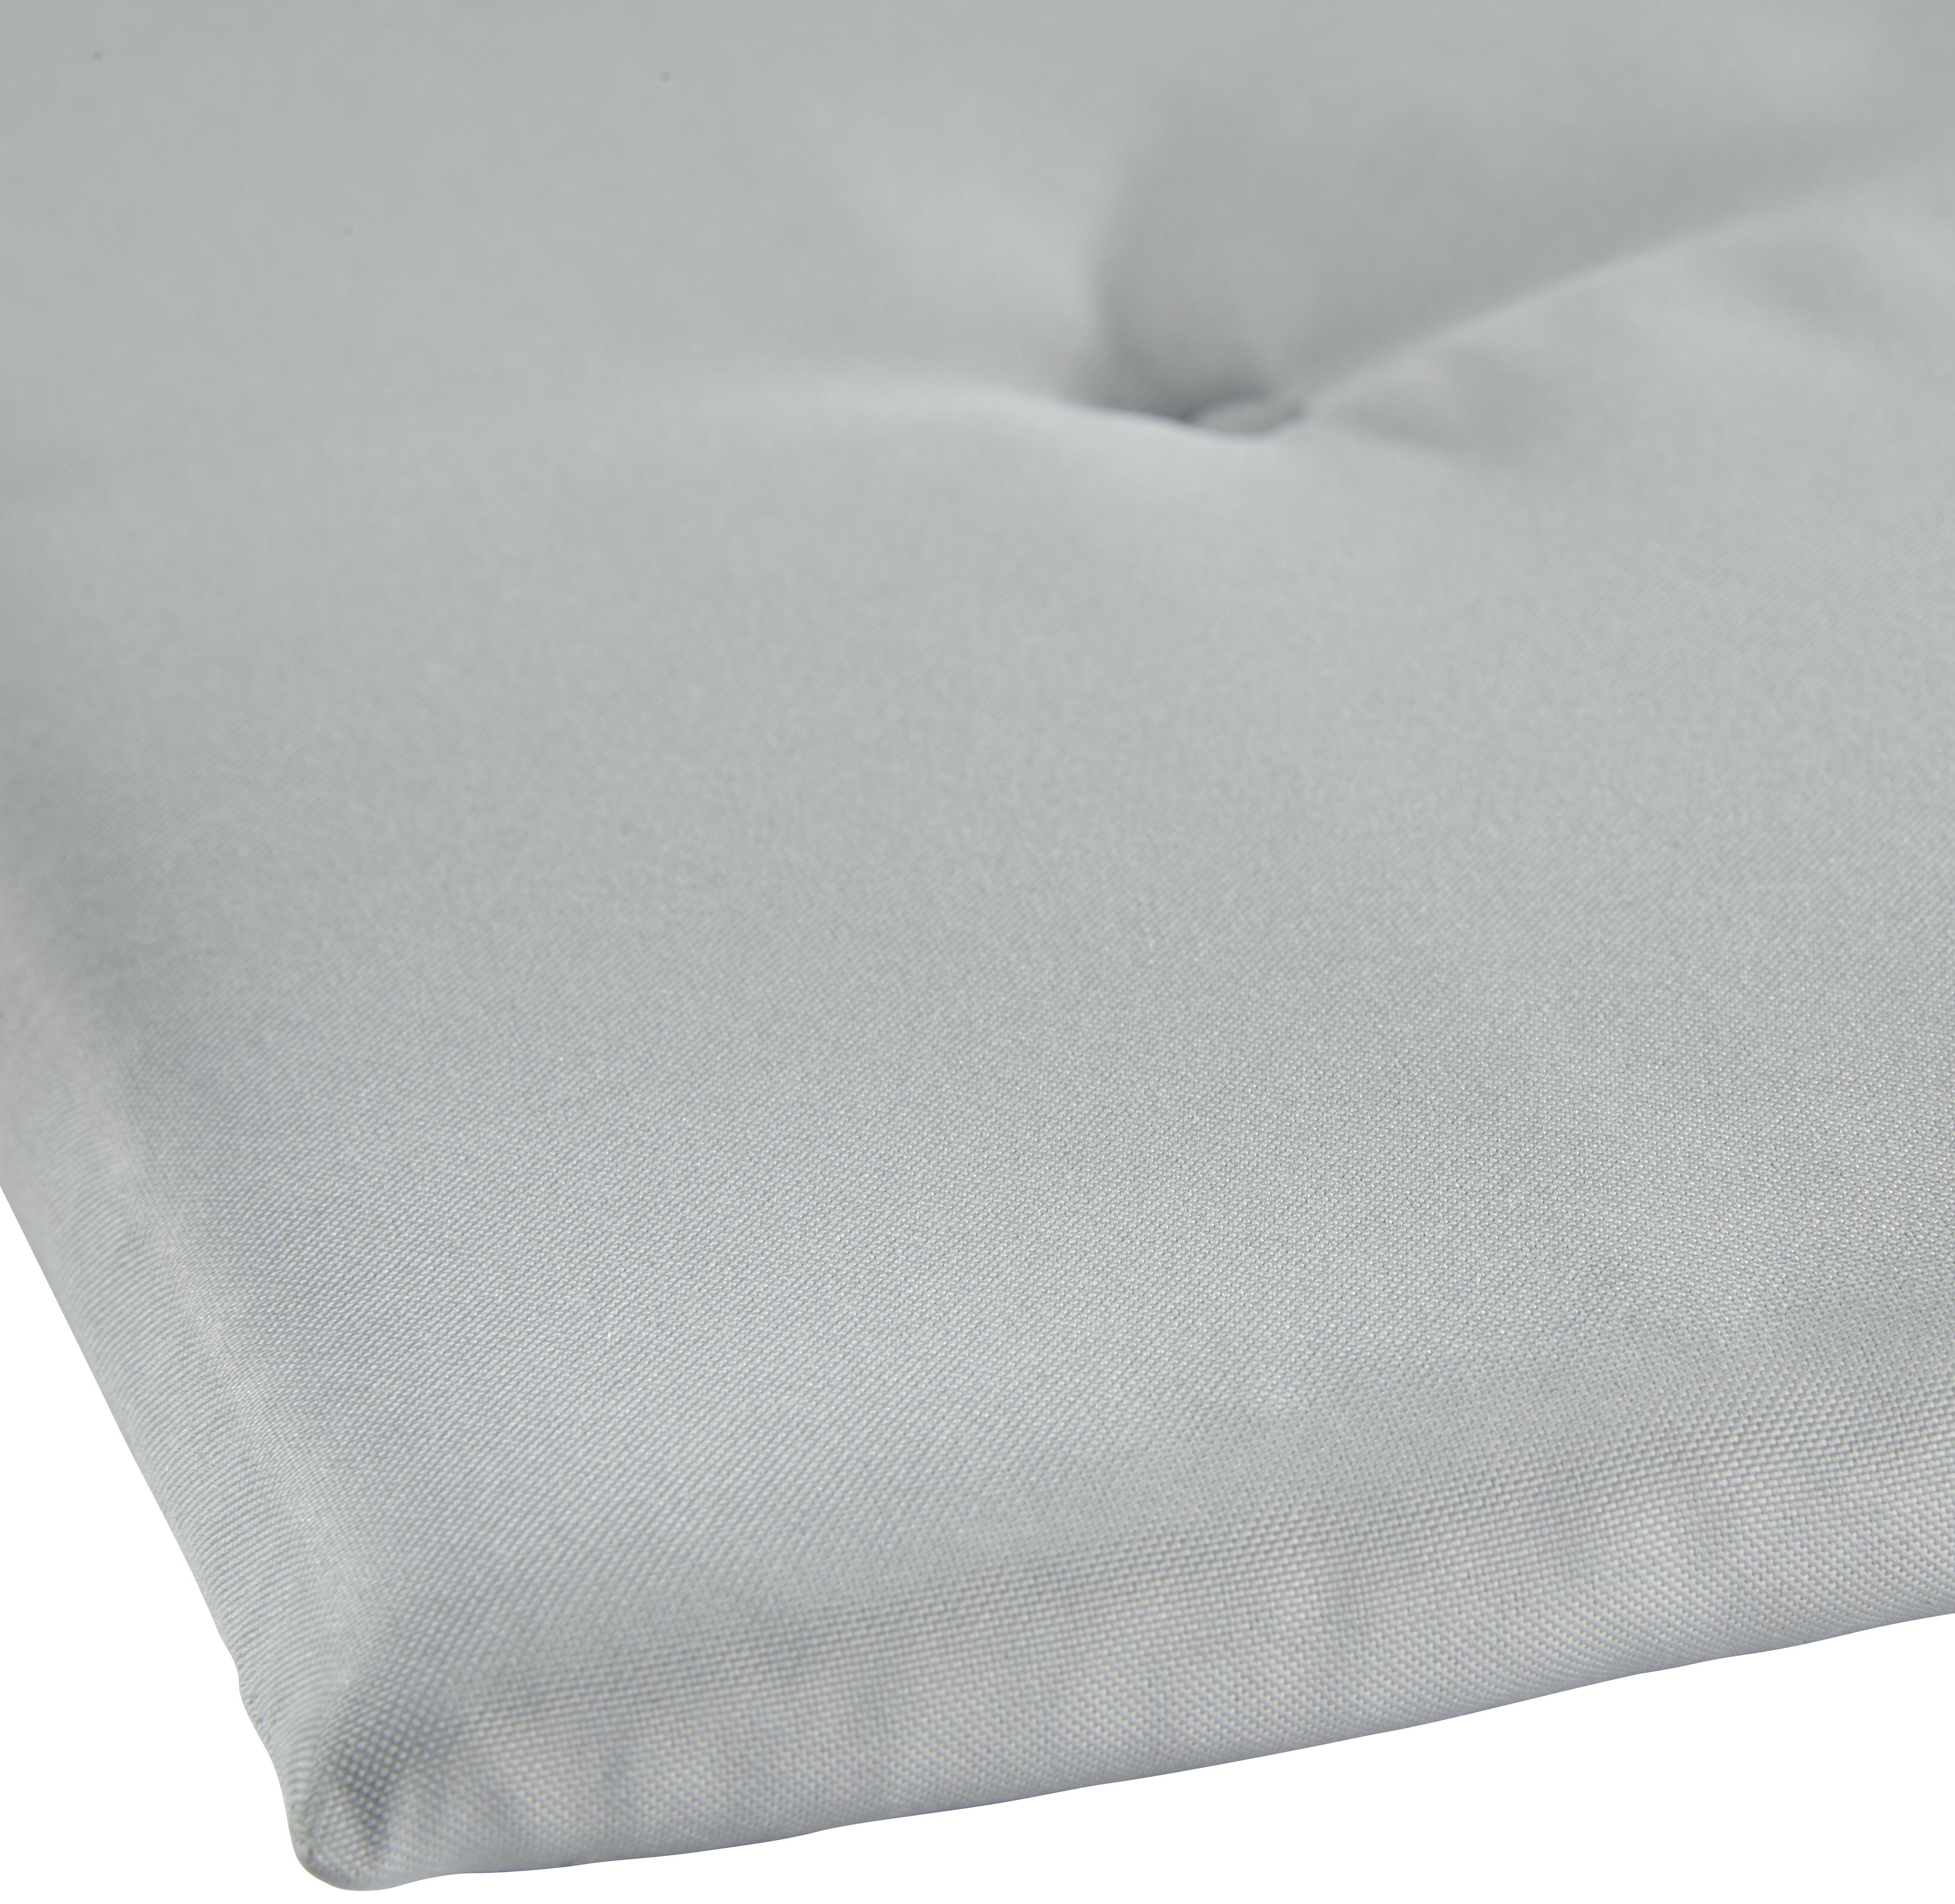 Polštář Na Židli Smokey - světle šedá, textil (40/2,5/40cm) - Modern Living